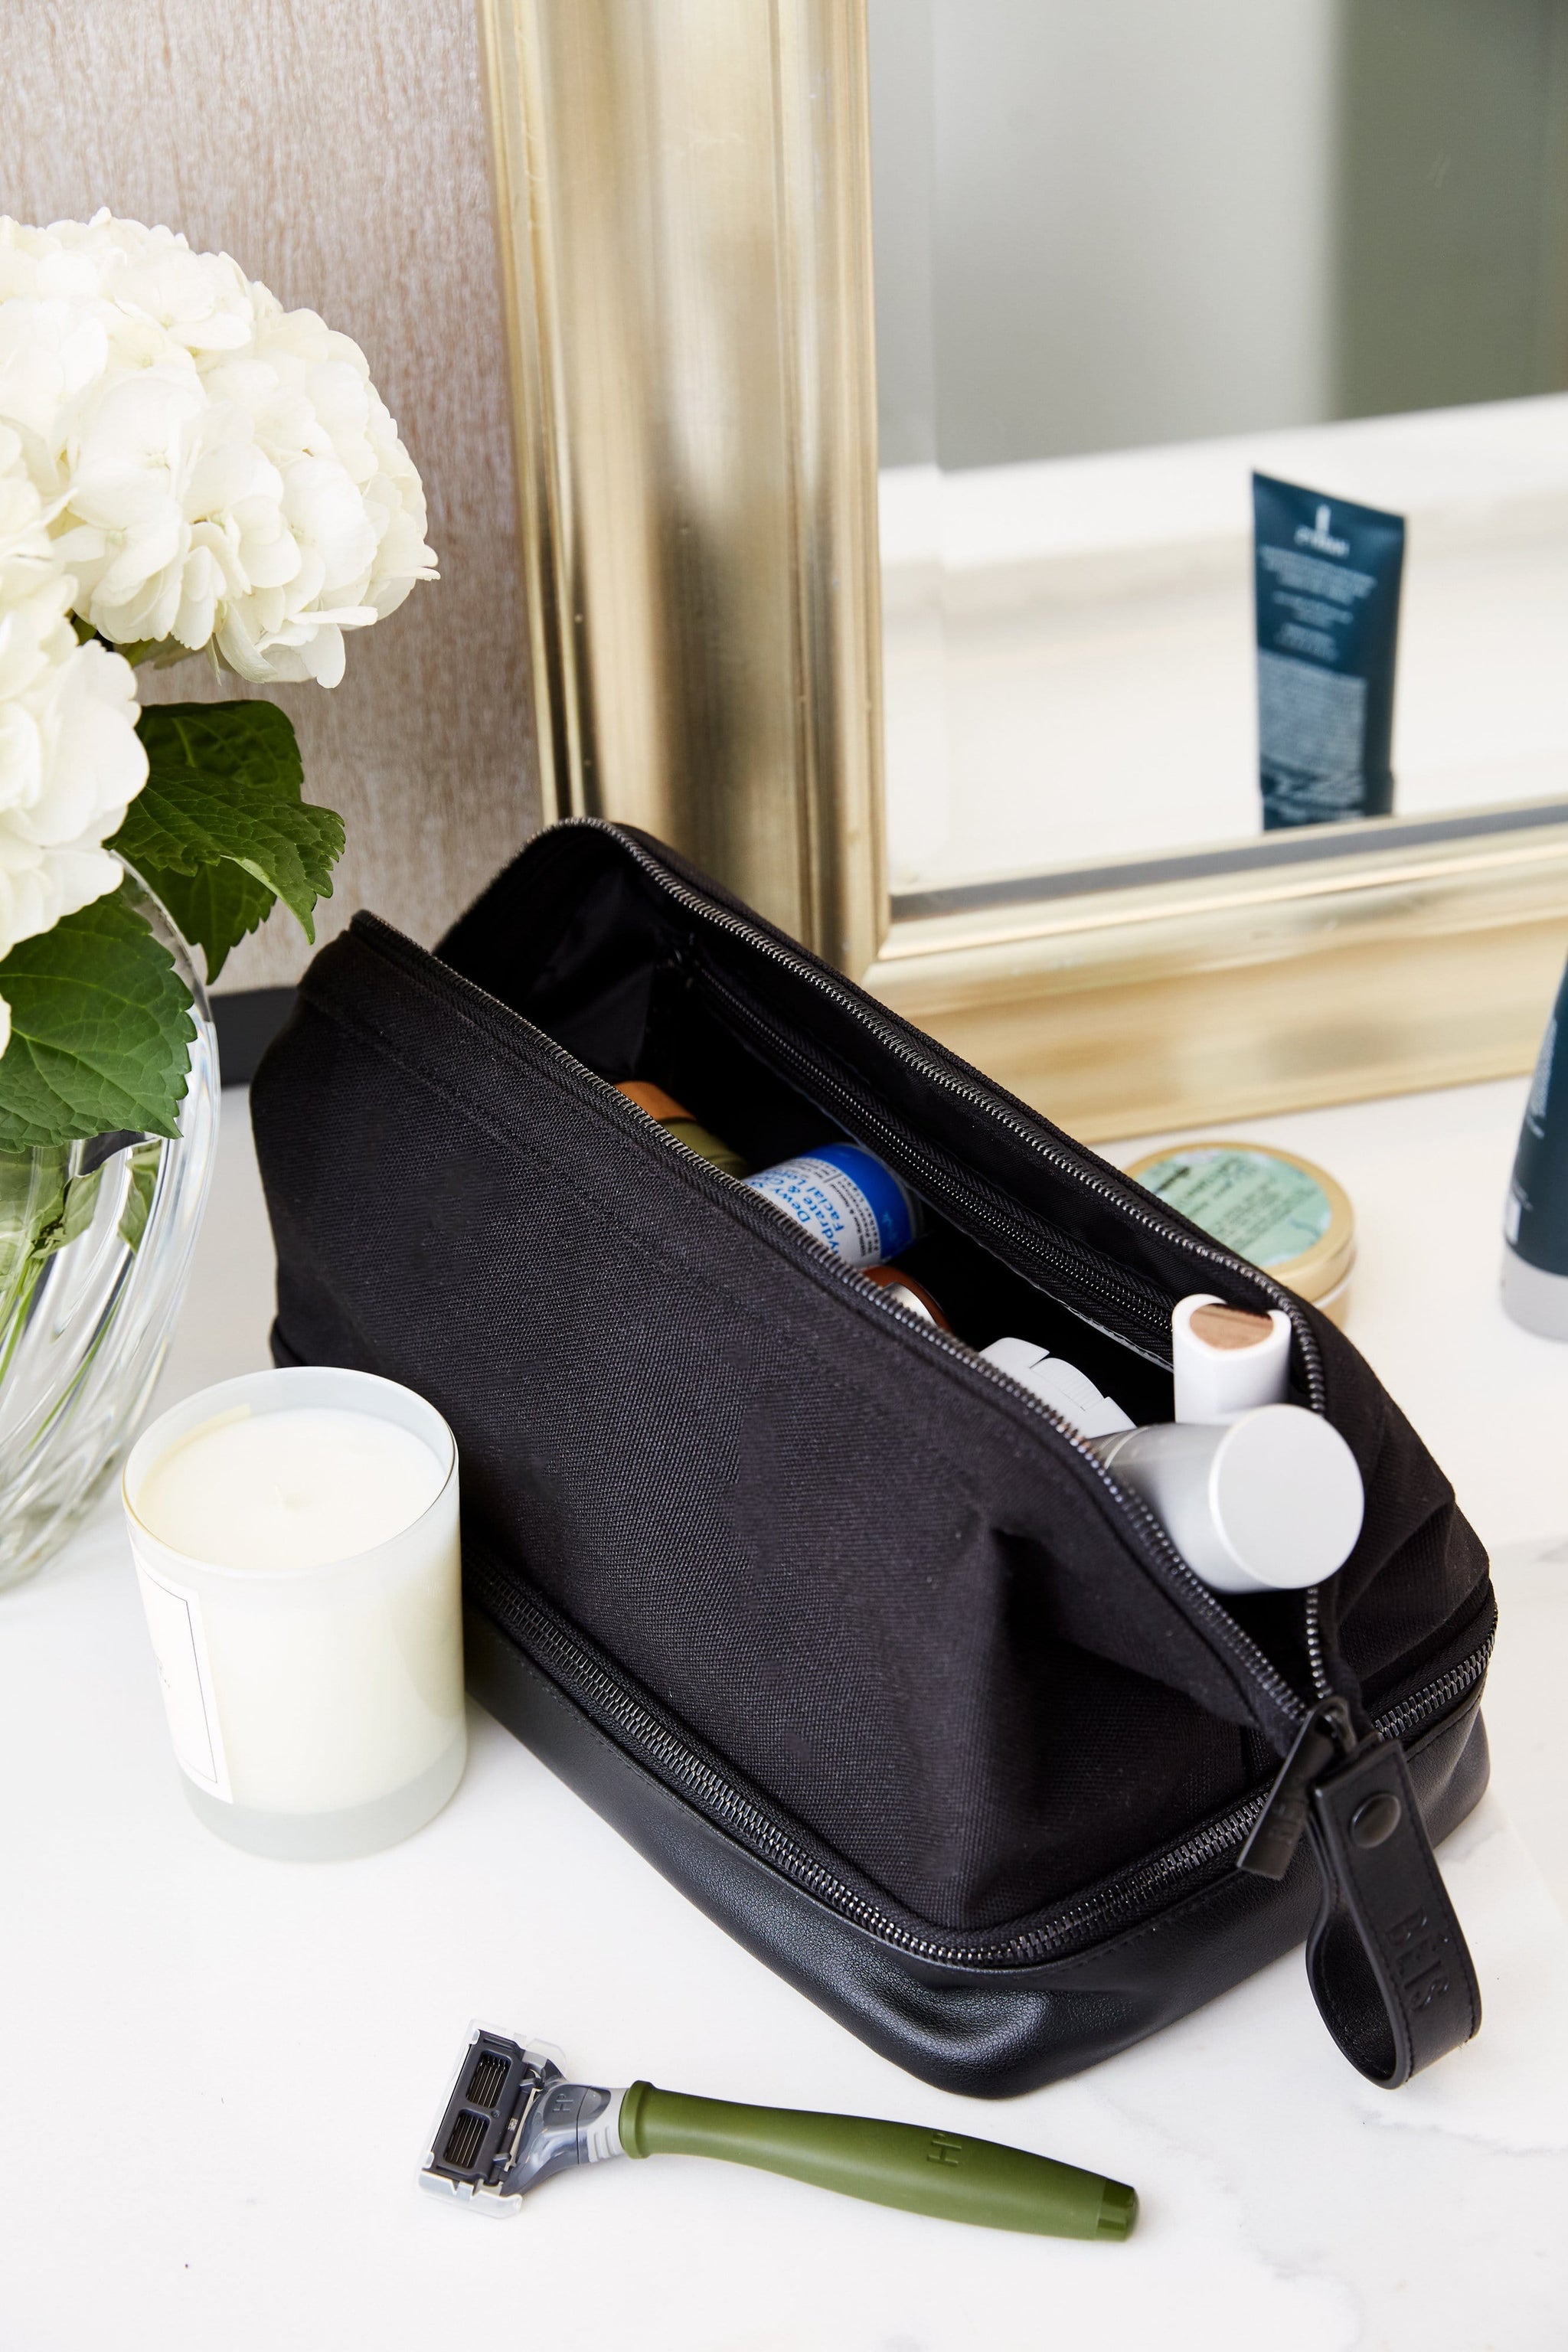 Toiletry Bag for Women, MIZATTO Hanging Travel Makeup Bag